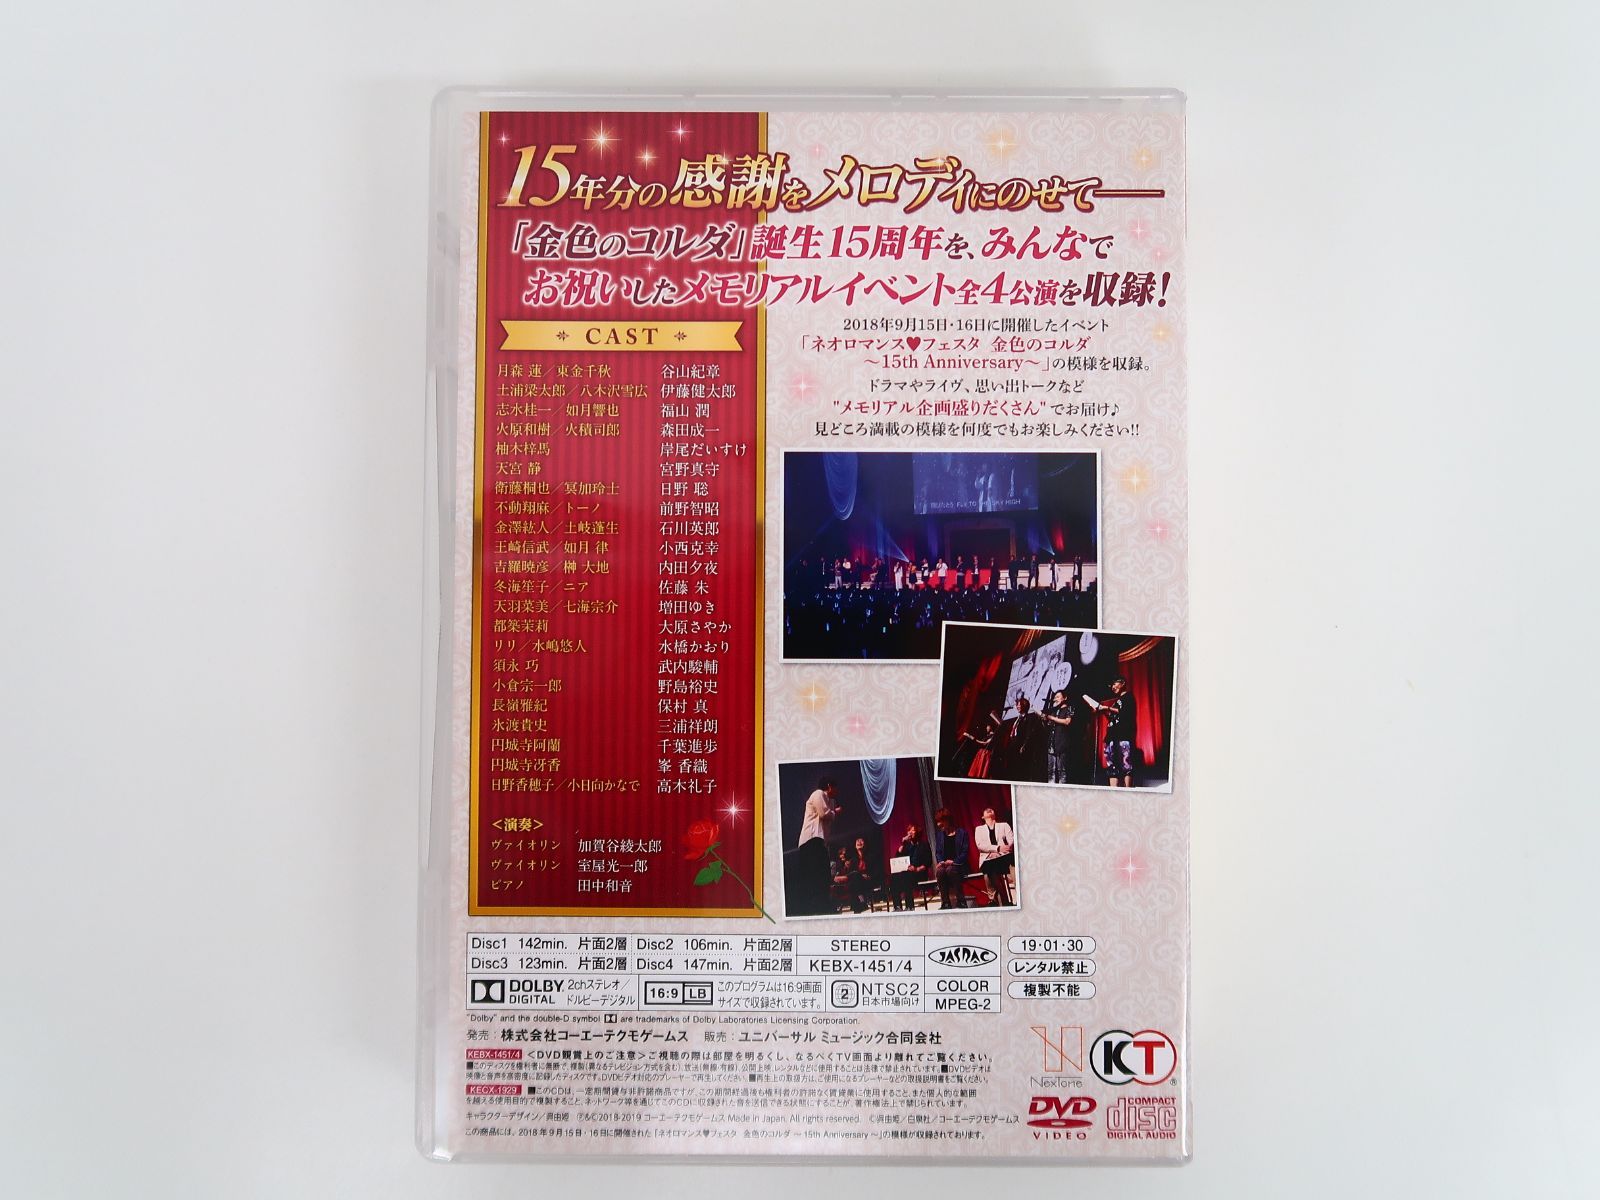 DVD/LIVE VIDEO ネオロマンス フェスタ 金色のコルダ 15th Anniversary 豪華版 - メルカリ